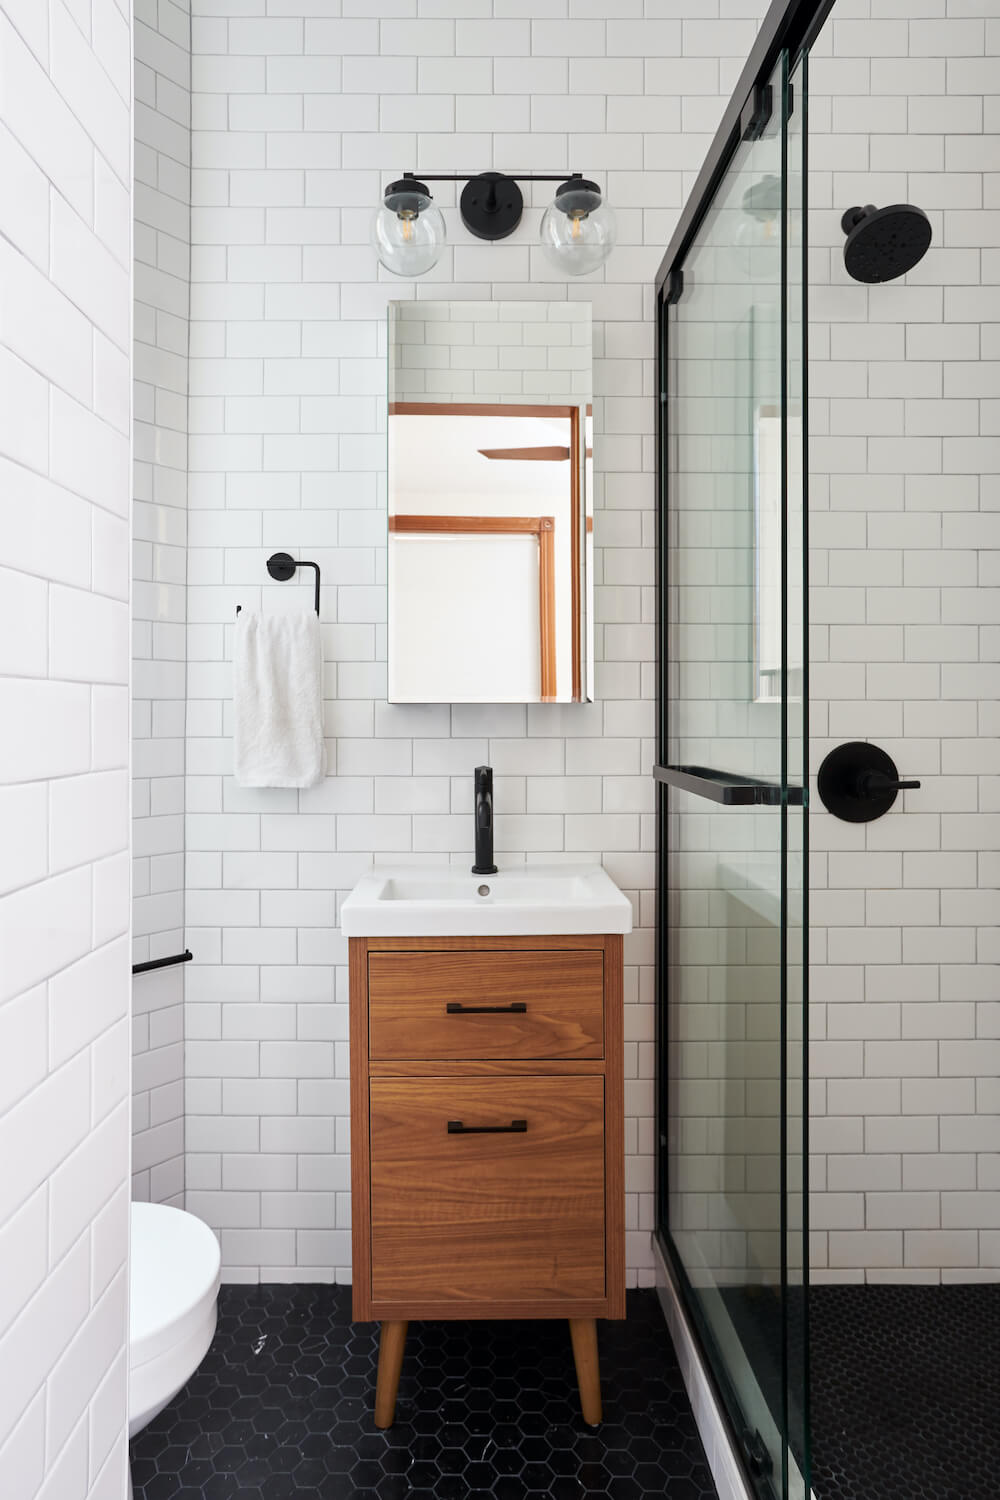 Bathroom with white tiles, black tiled floor, and glass paneled shower